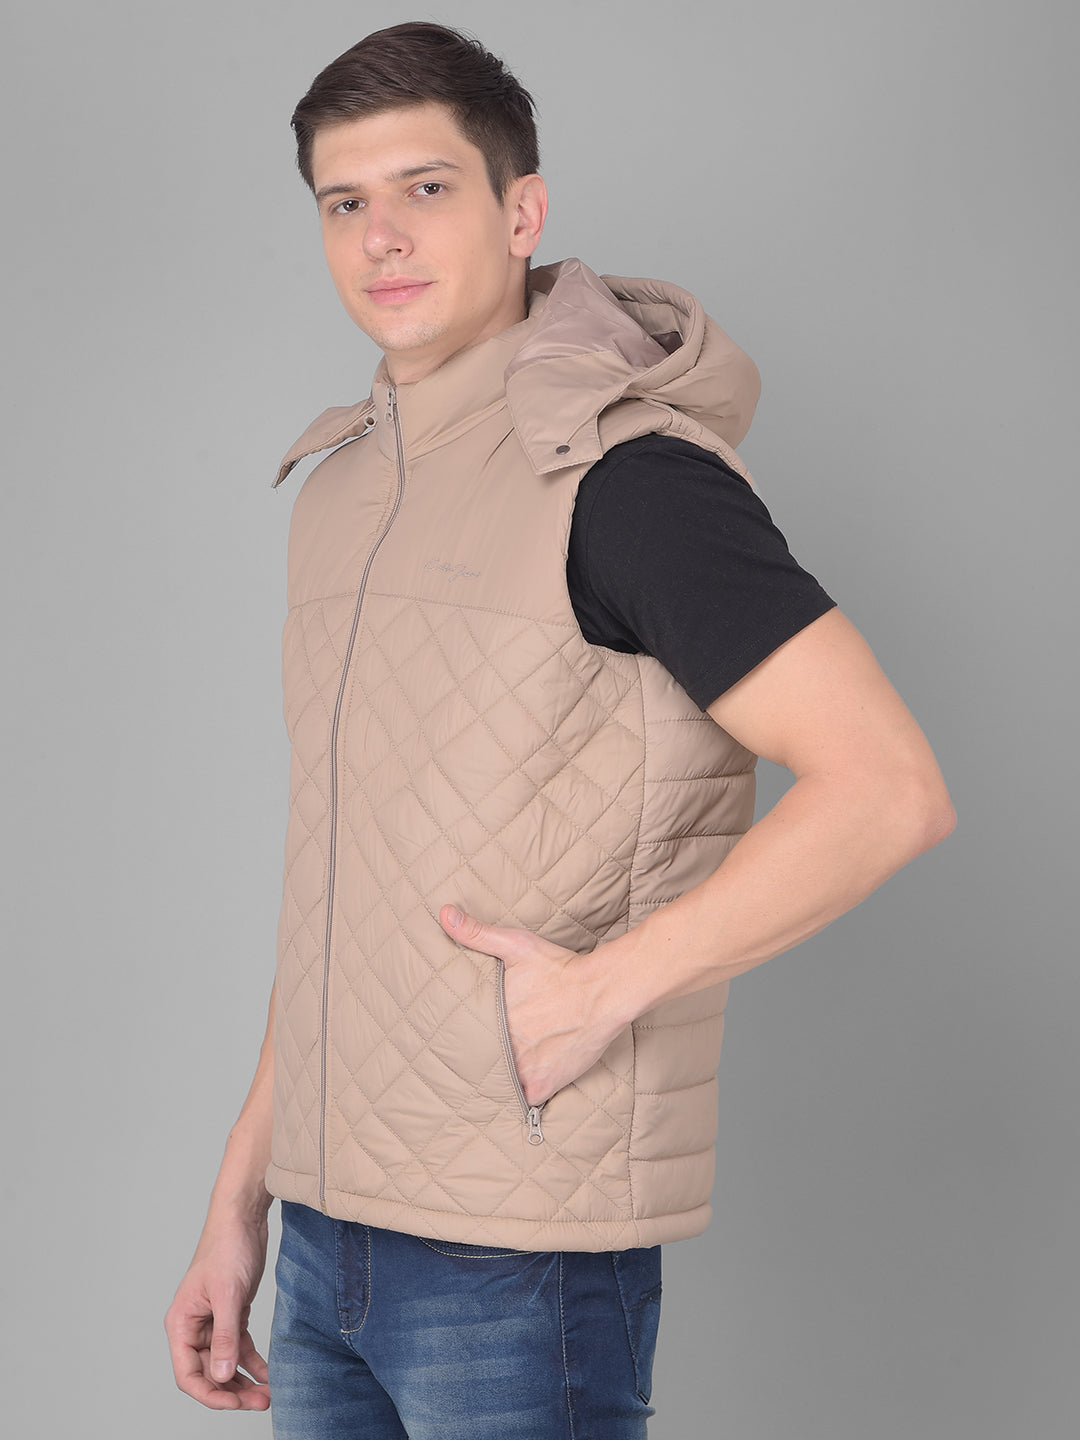 Jacket Design | Jacket for Kameez (Kurti ) | Cutting and Stitching | BST -  YouTube